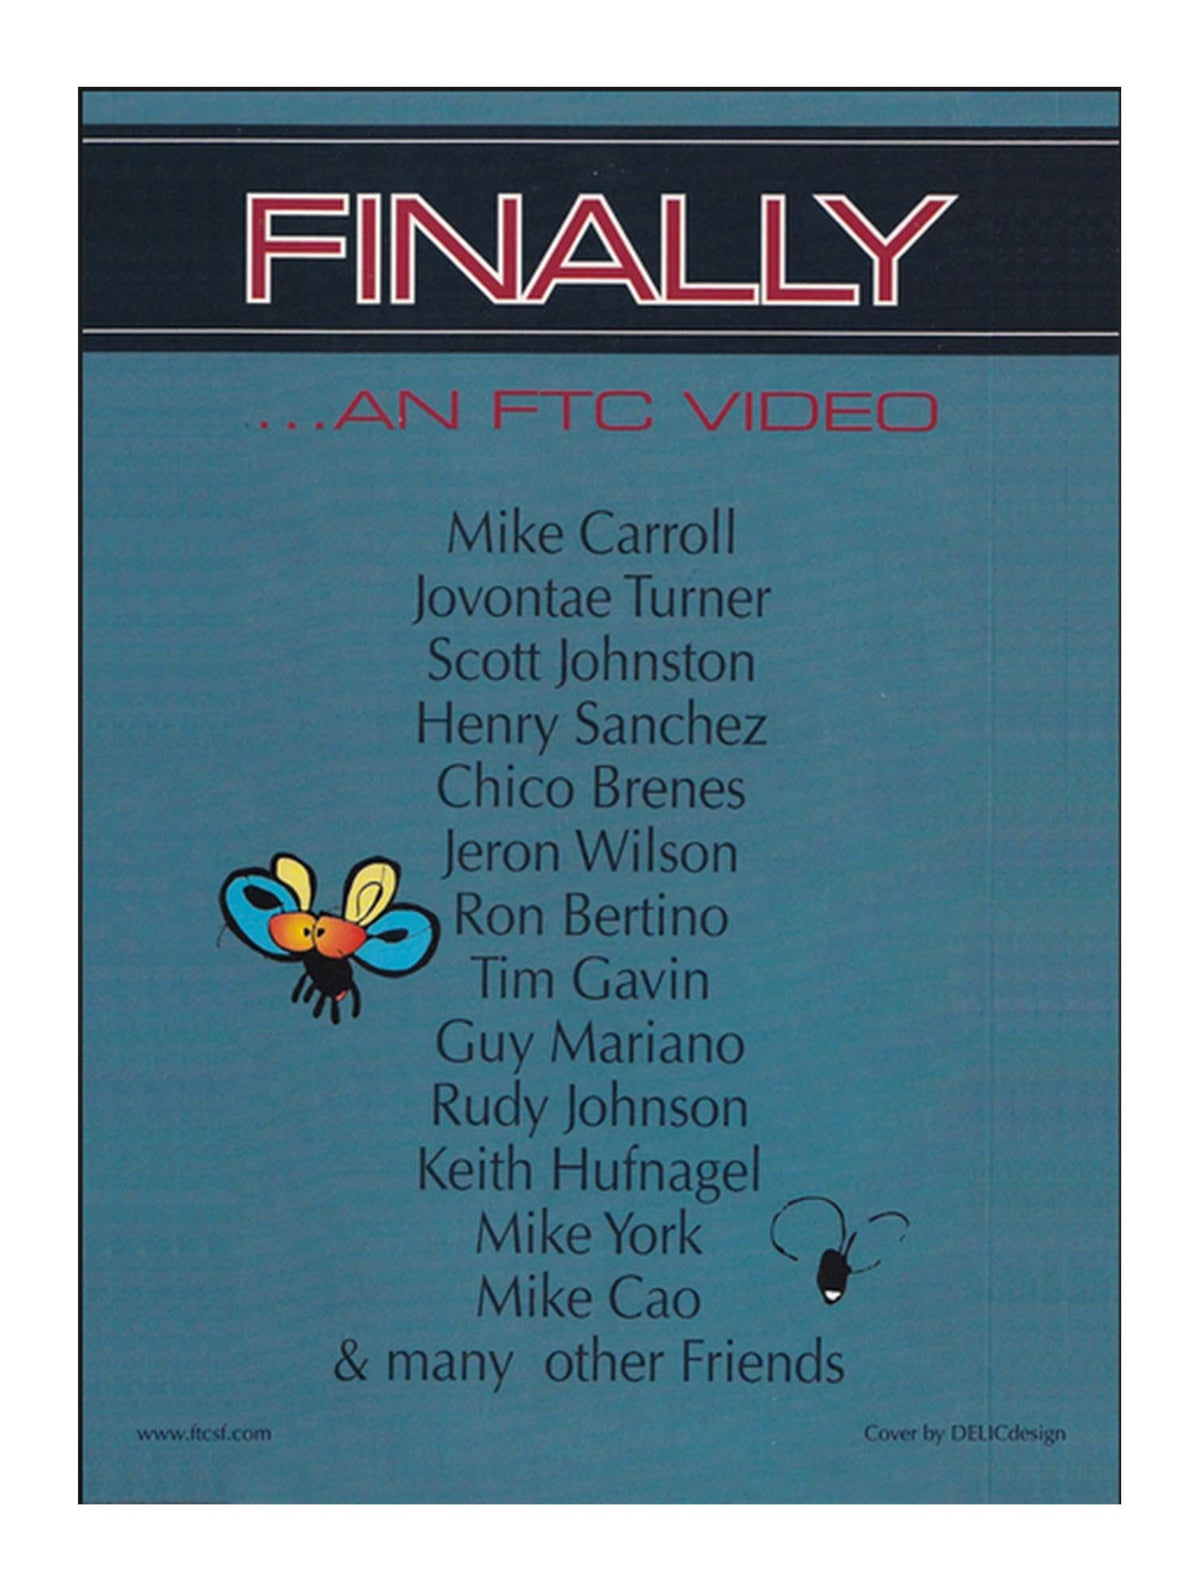 FTC FINALLY DVD